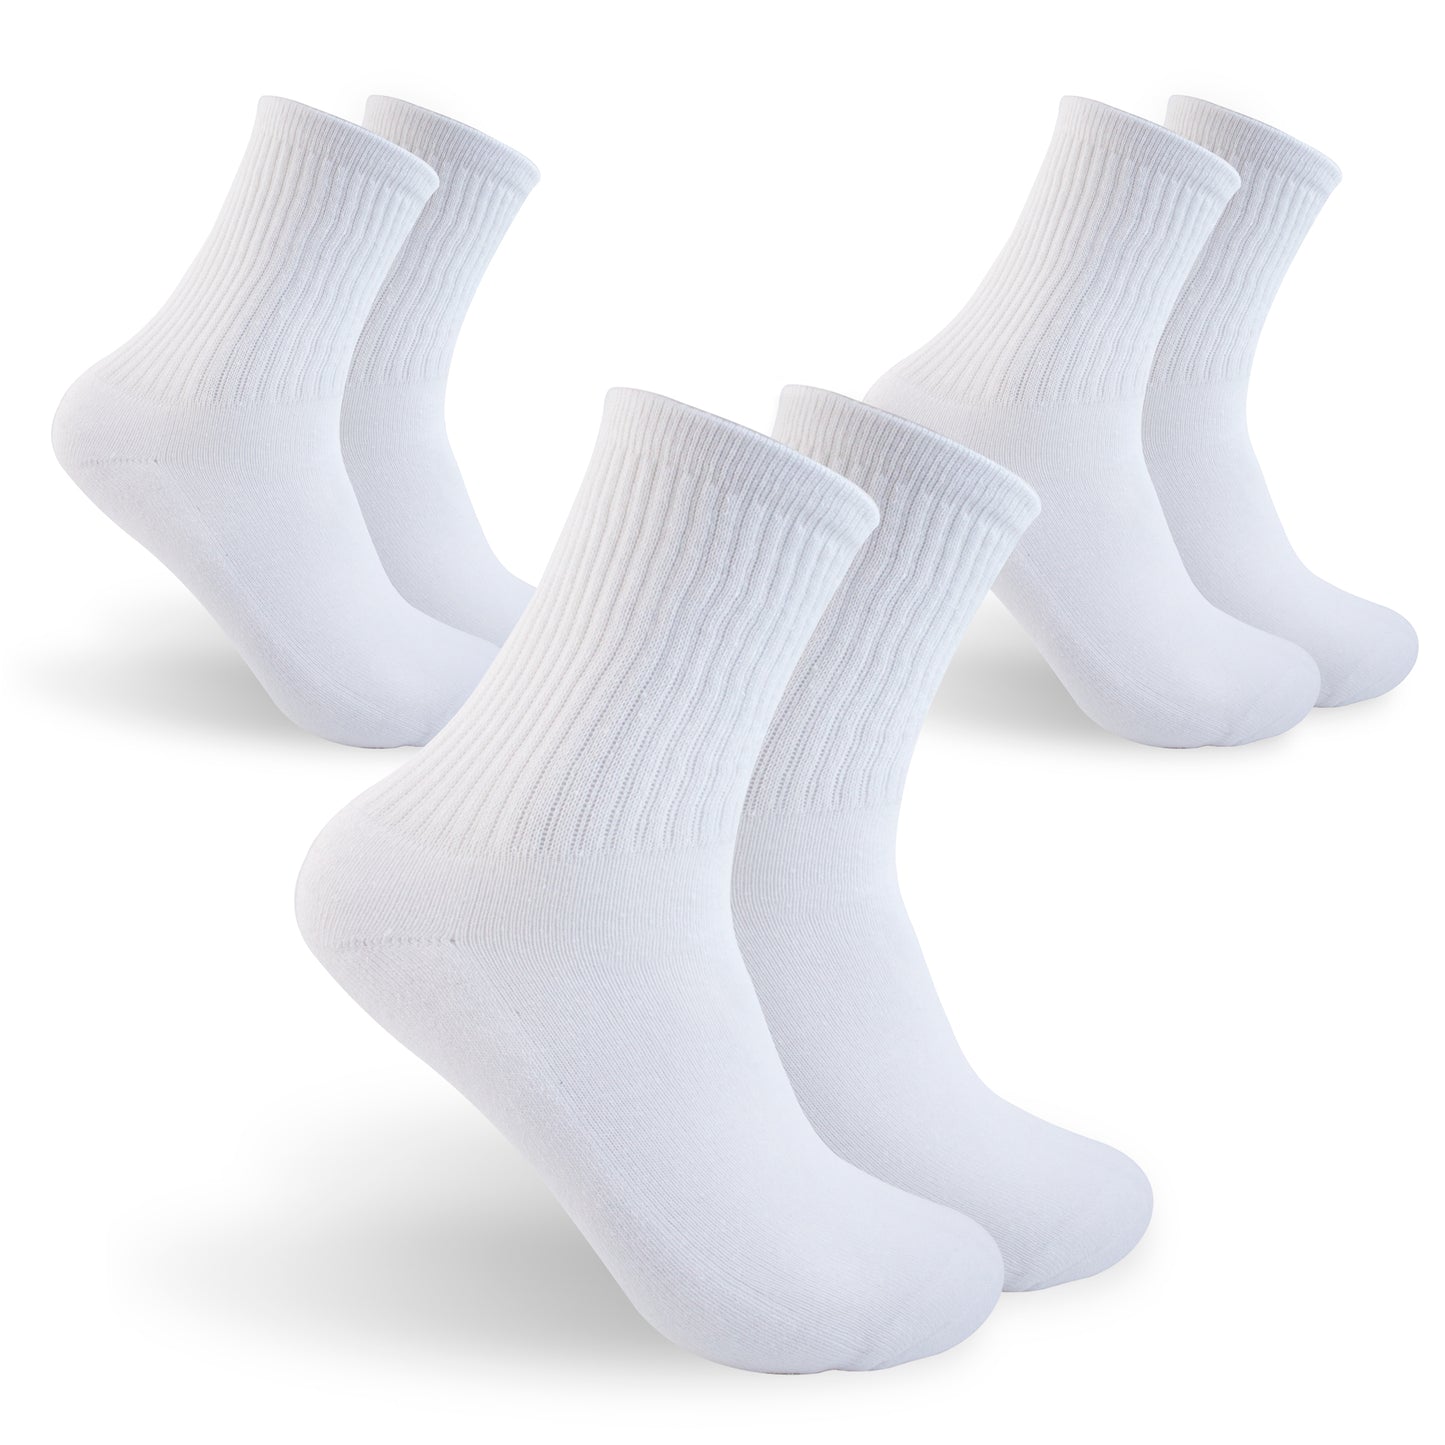 Calcetines Largos Blancos para Hombre - 3 Pack